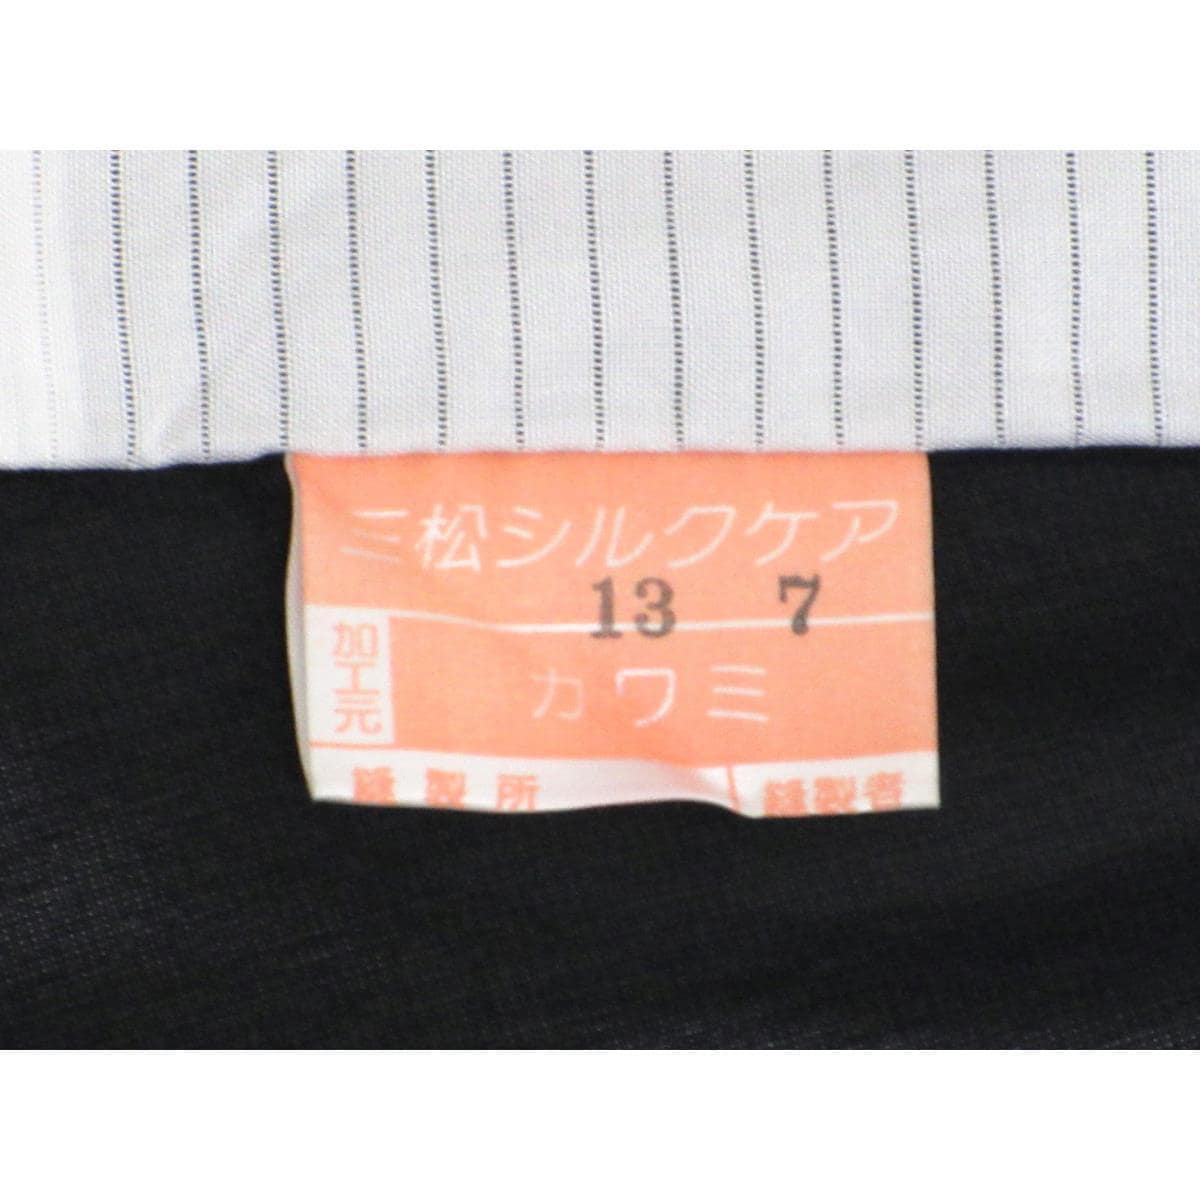 Single garment Satsumugi